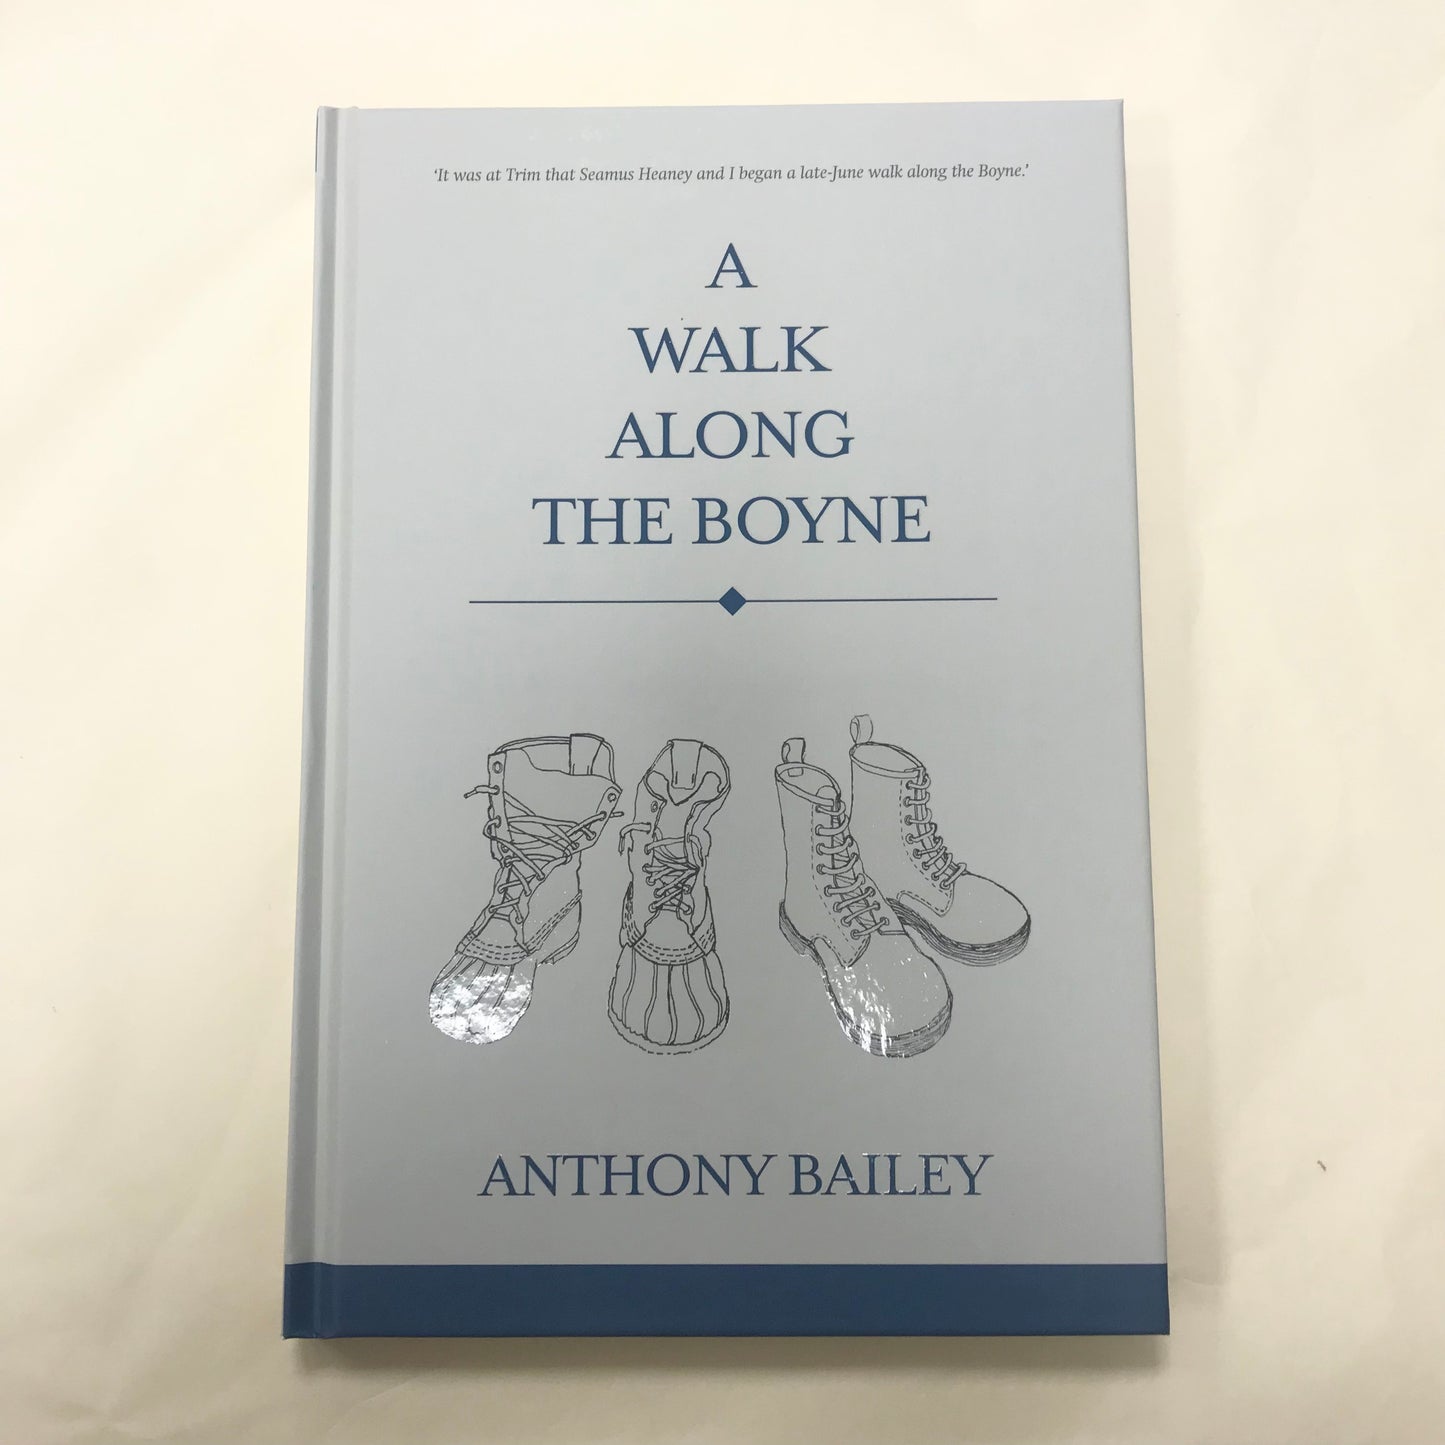 A Walk Along The Boyne